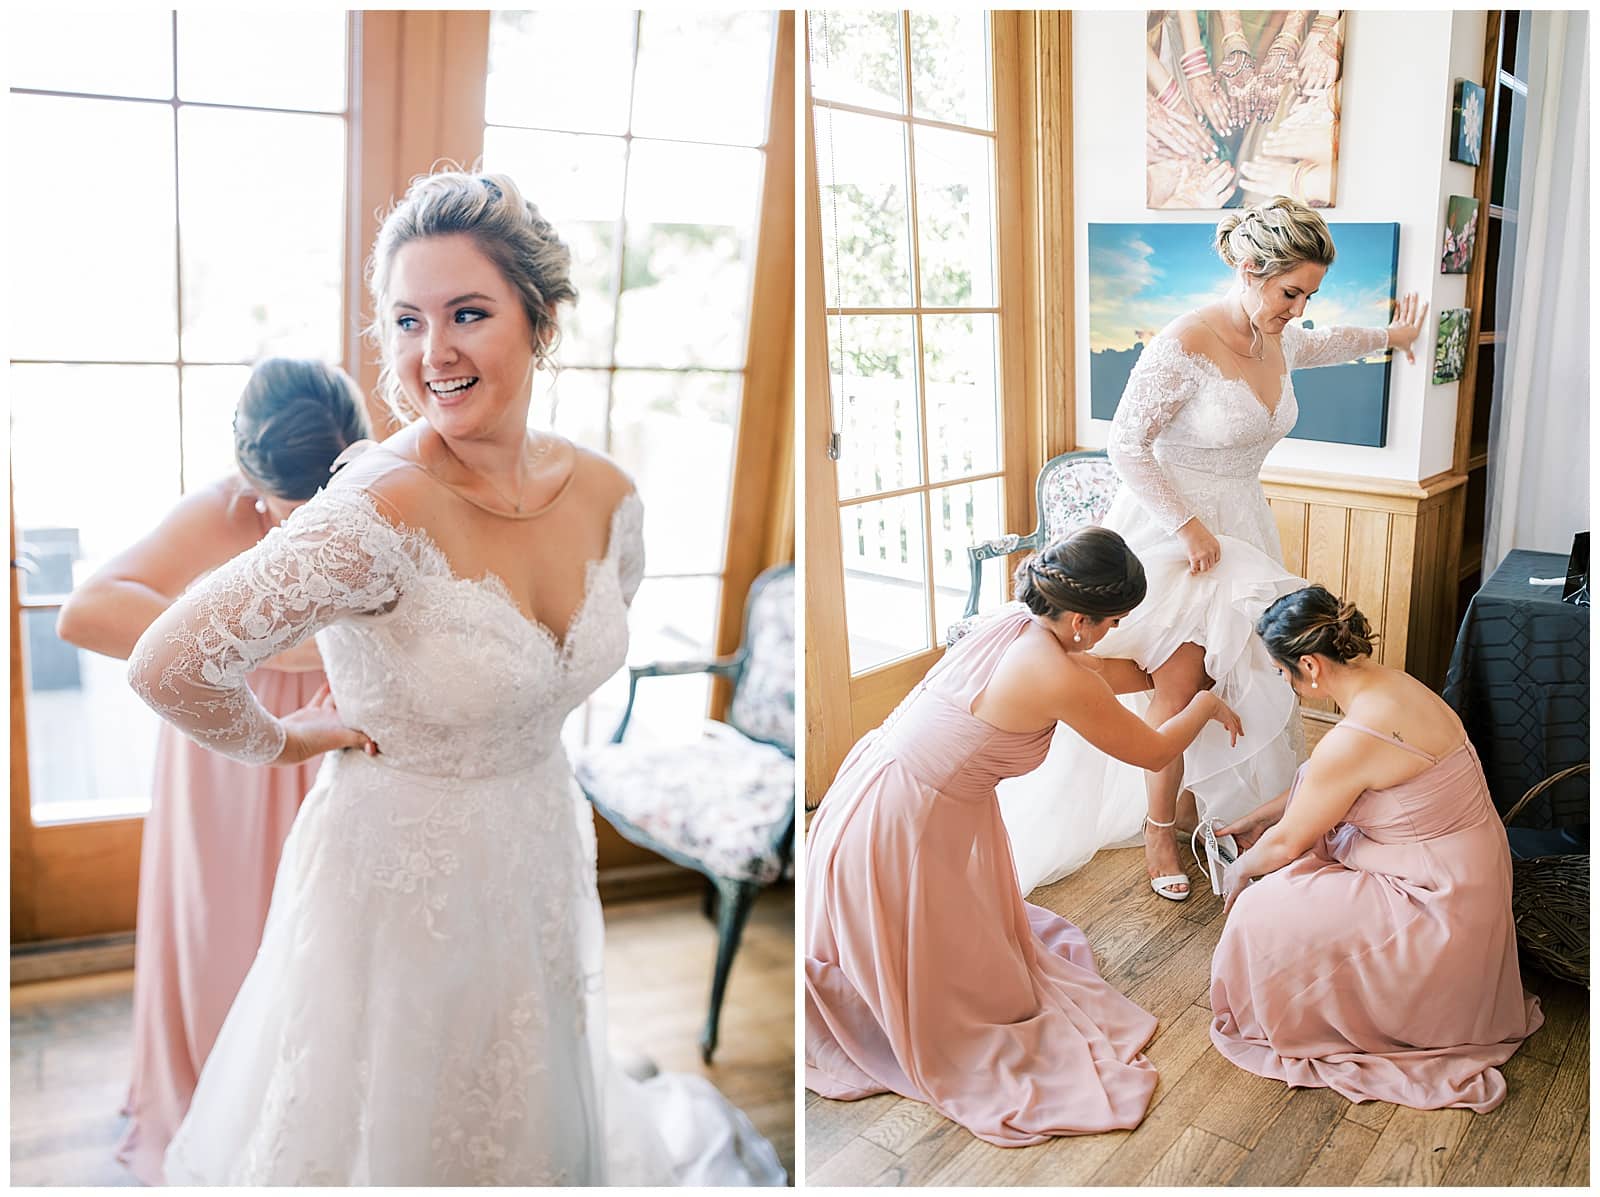 Danielle-Defayette-Photography-Castle-Hill-Cider-Wedding-Charlottesville-2020_0010.jpg